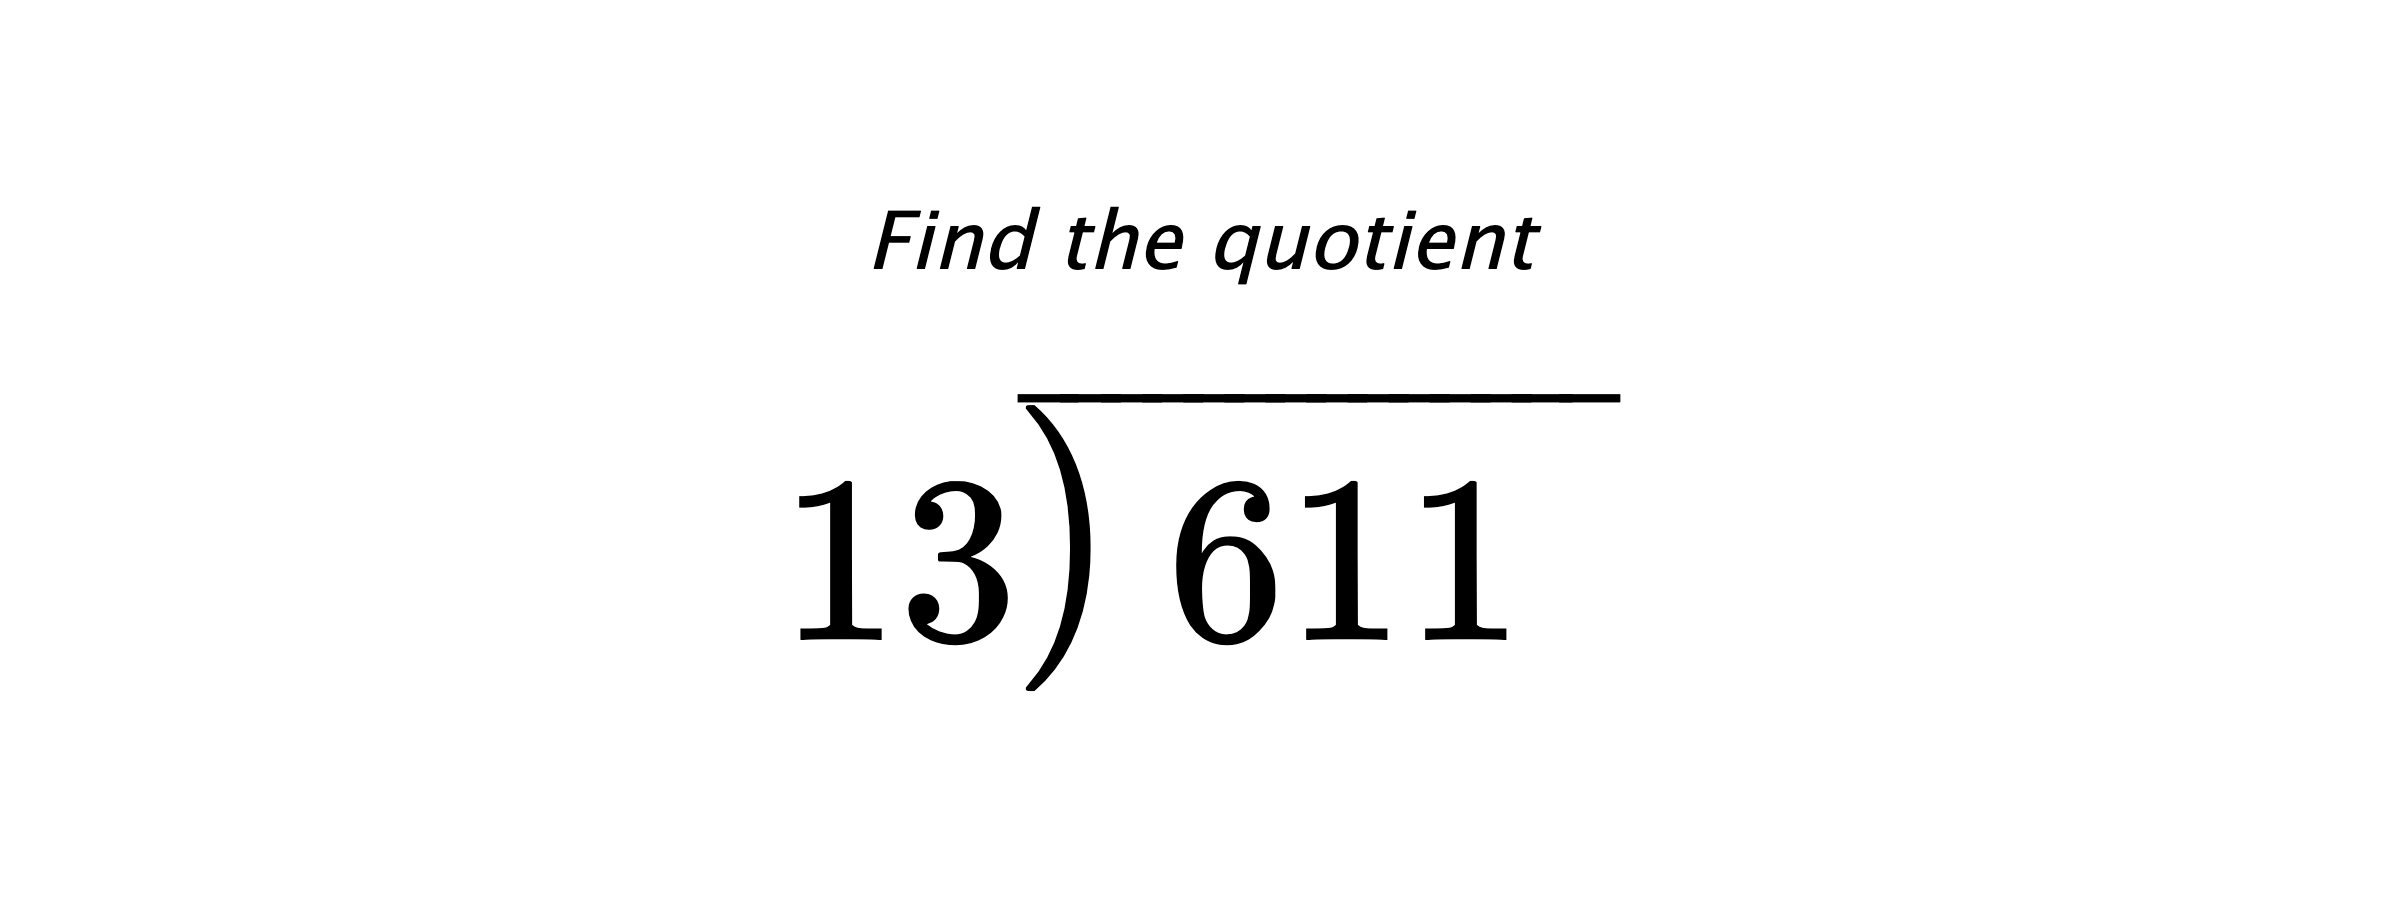 Find the quotient $ 13{\overline{\smash{\raise.3ex\hbox{$\big)$}}\,611\phantom{)}}} $